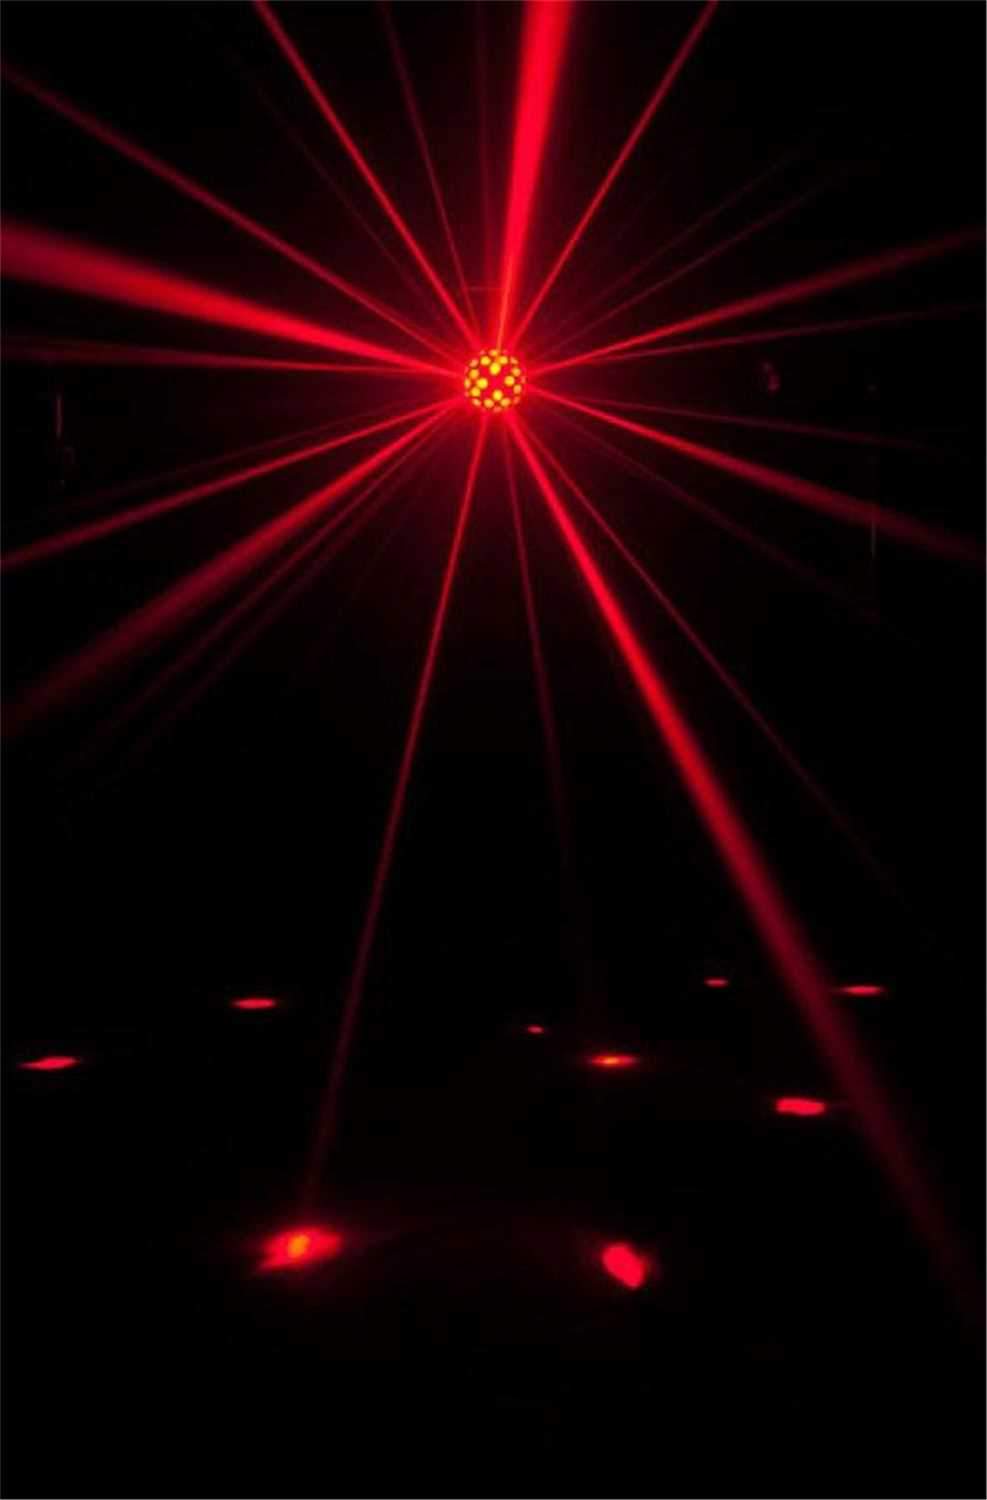 ADJ American DJ Mini Tri Ball II LED Effect Light - PSSL ProSound and Stage Lighting